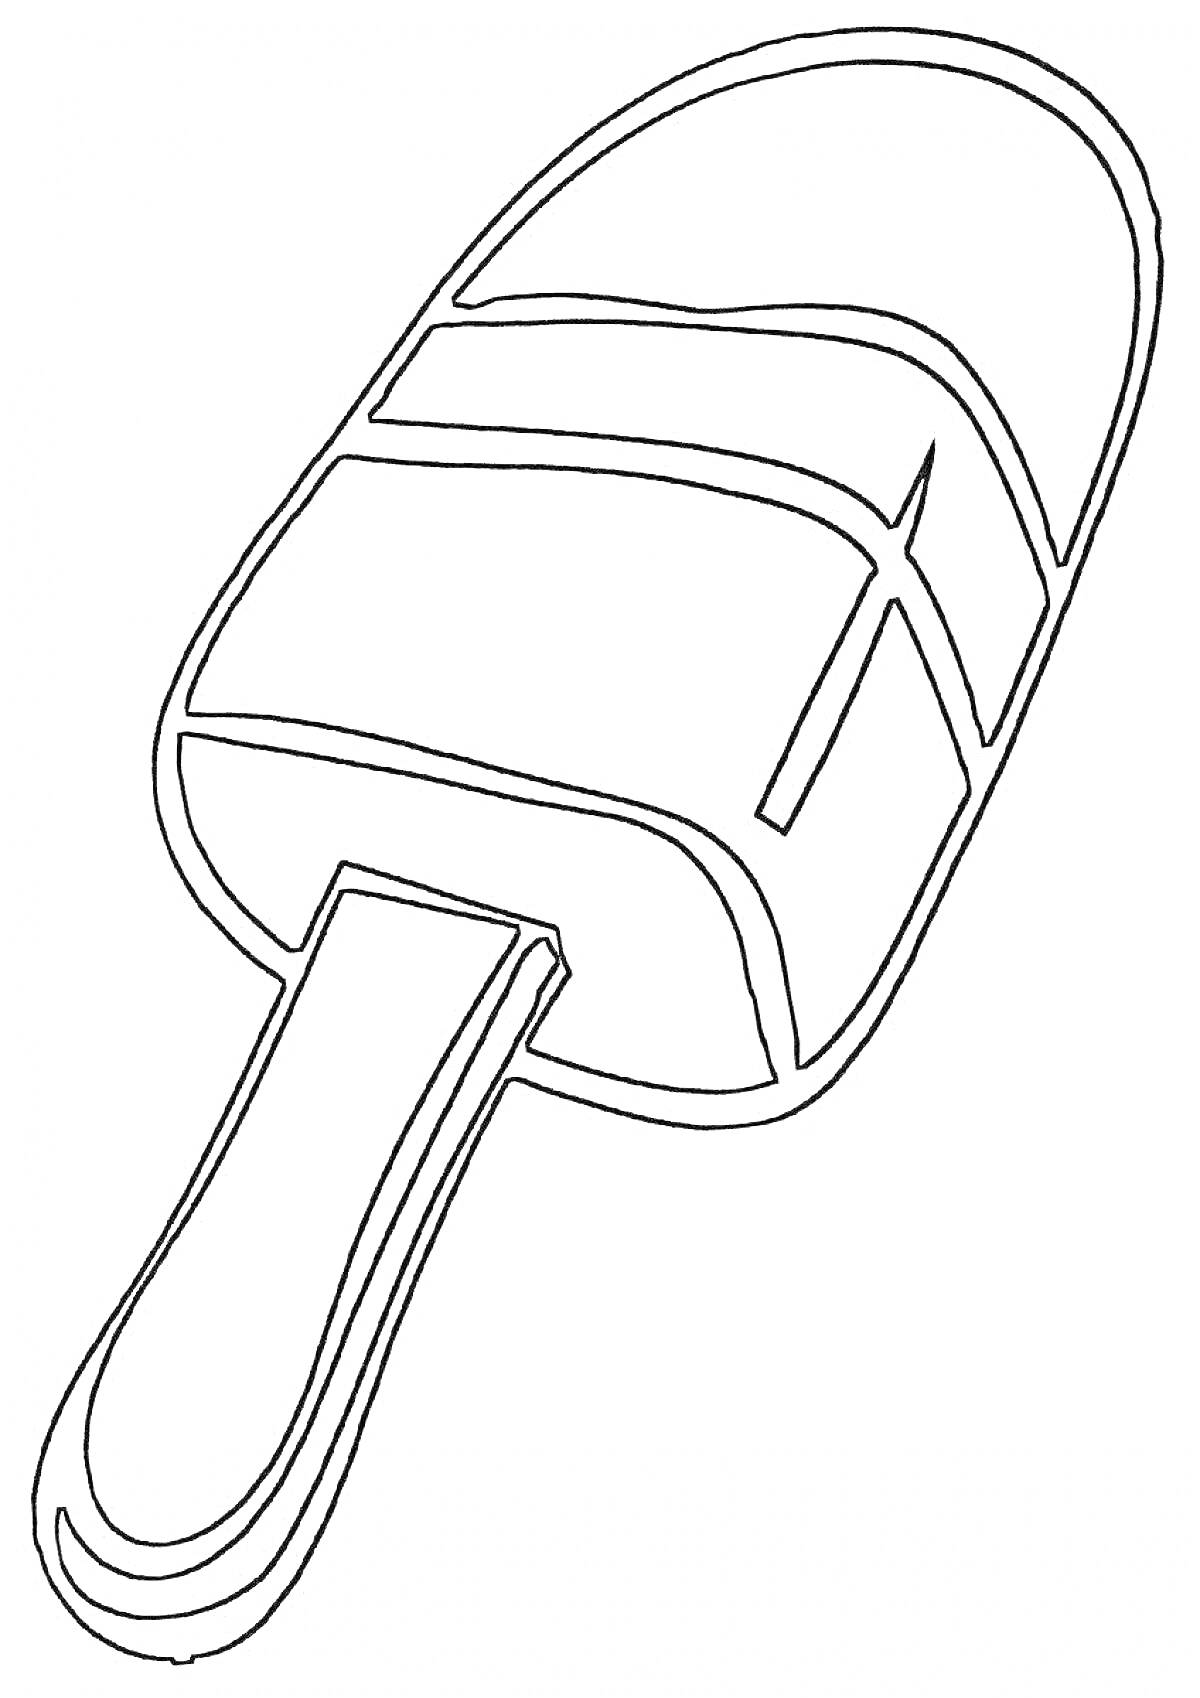 Раскраска Эскимо на палочке с геометрическими рисунками